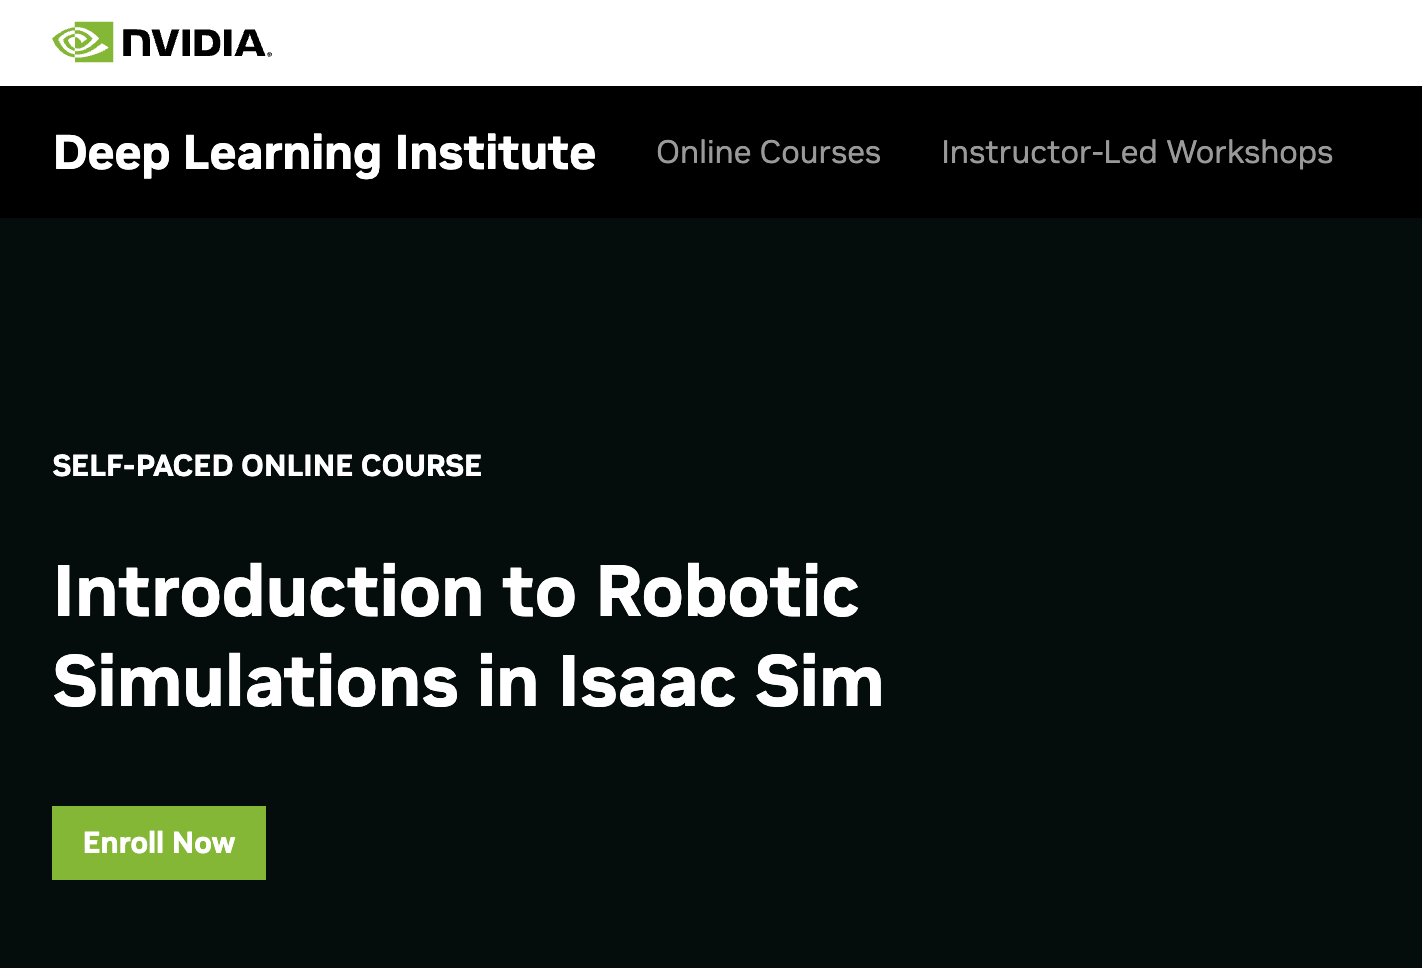 NVIDIA Course on Robotics in Isaac Sim